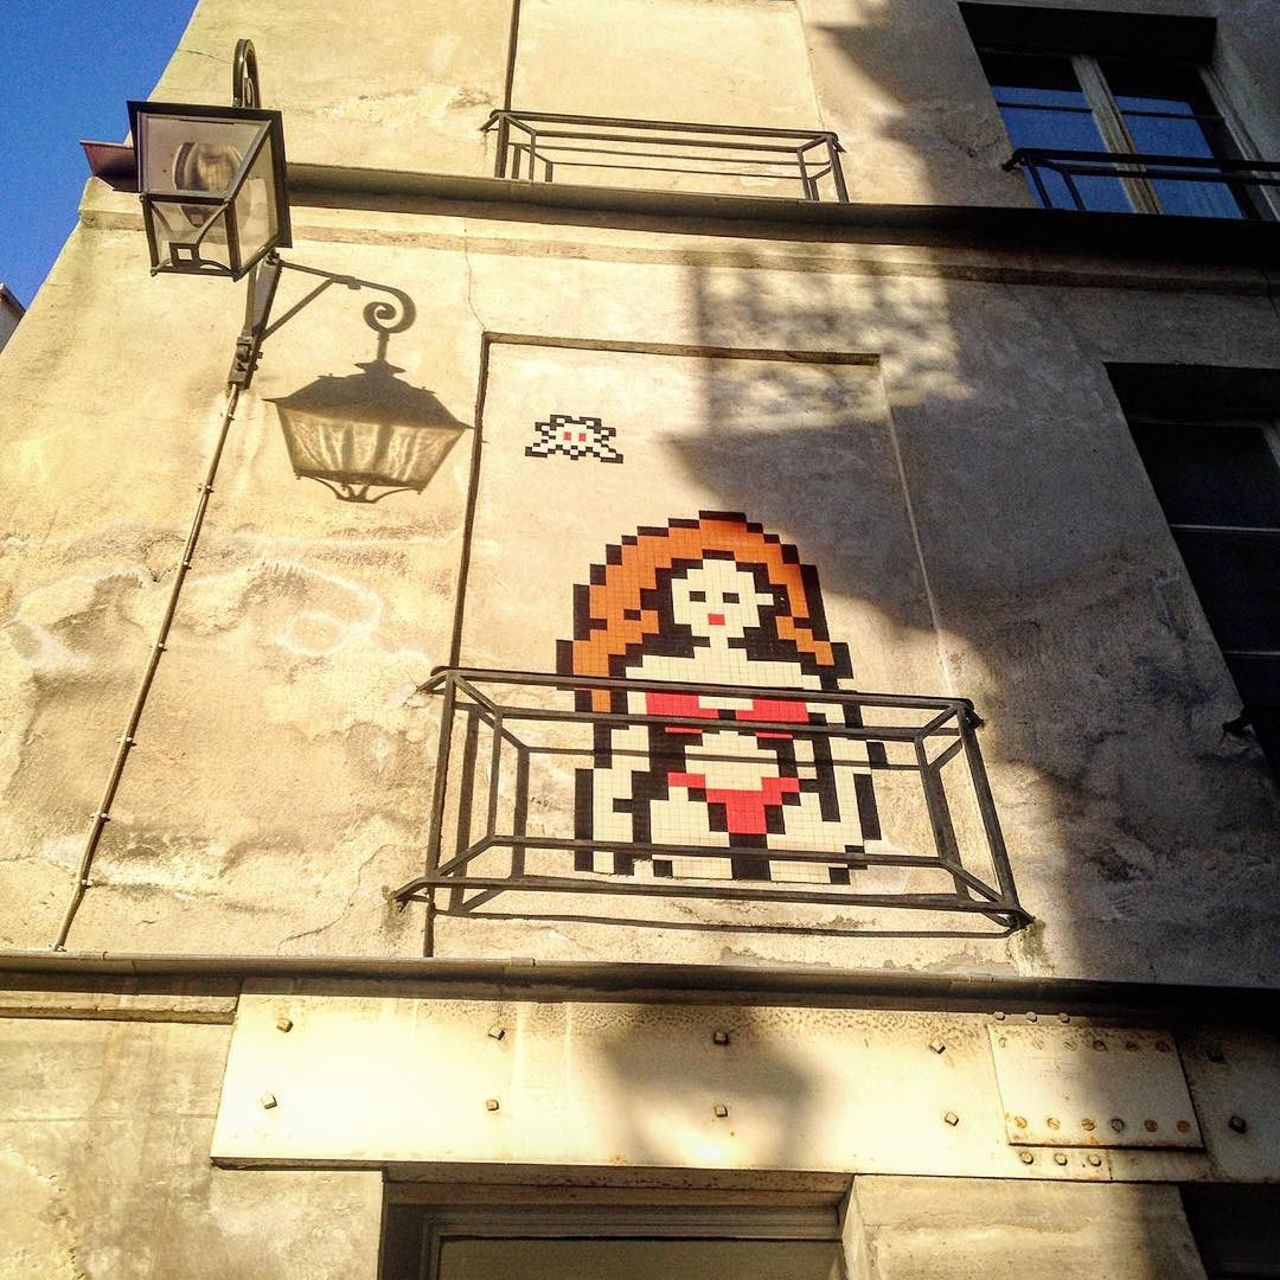 #Paris #graffiti photo by @genaropiano http://ift.tt/1O3Dstr #StreetArt https://t.co/QIExW4KCFV